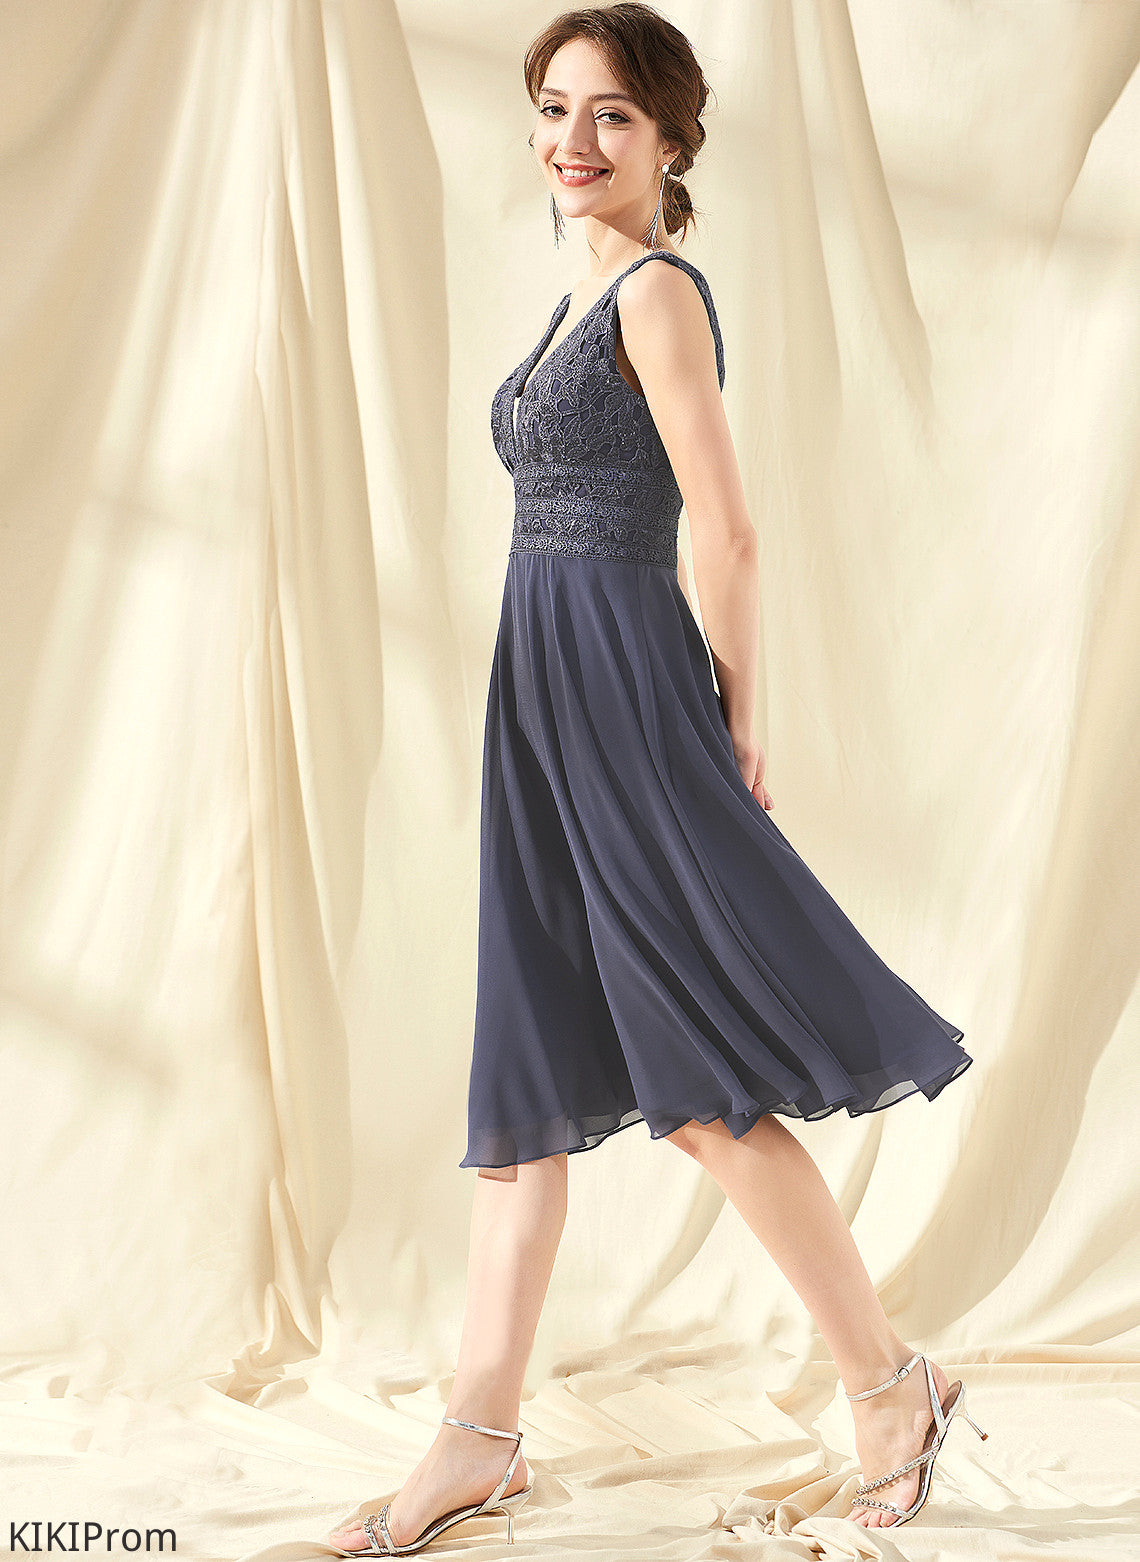 Chiffon V-neck Homecoming Homecoming Dresses Lace A-Line Knee-Length Dress Lauretta